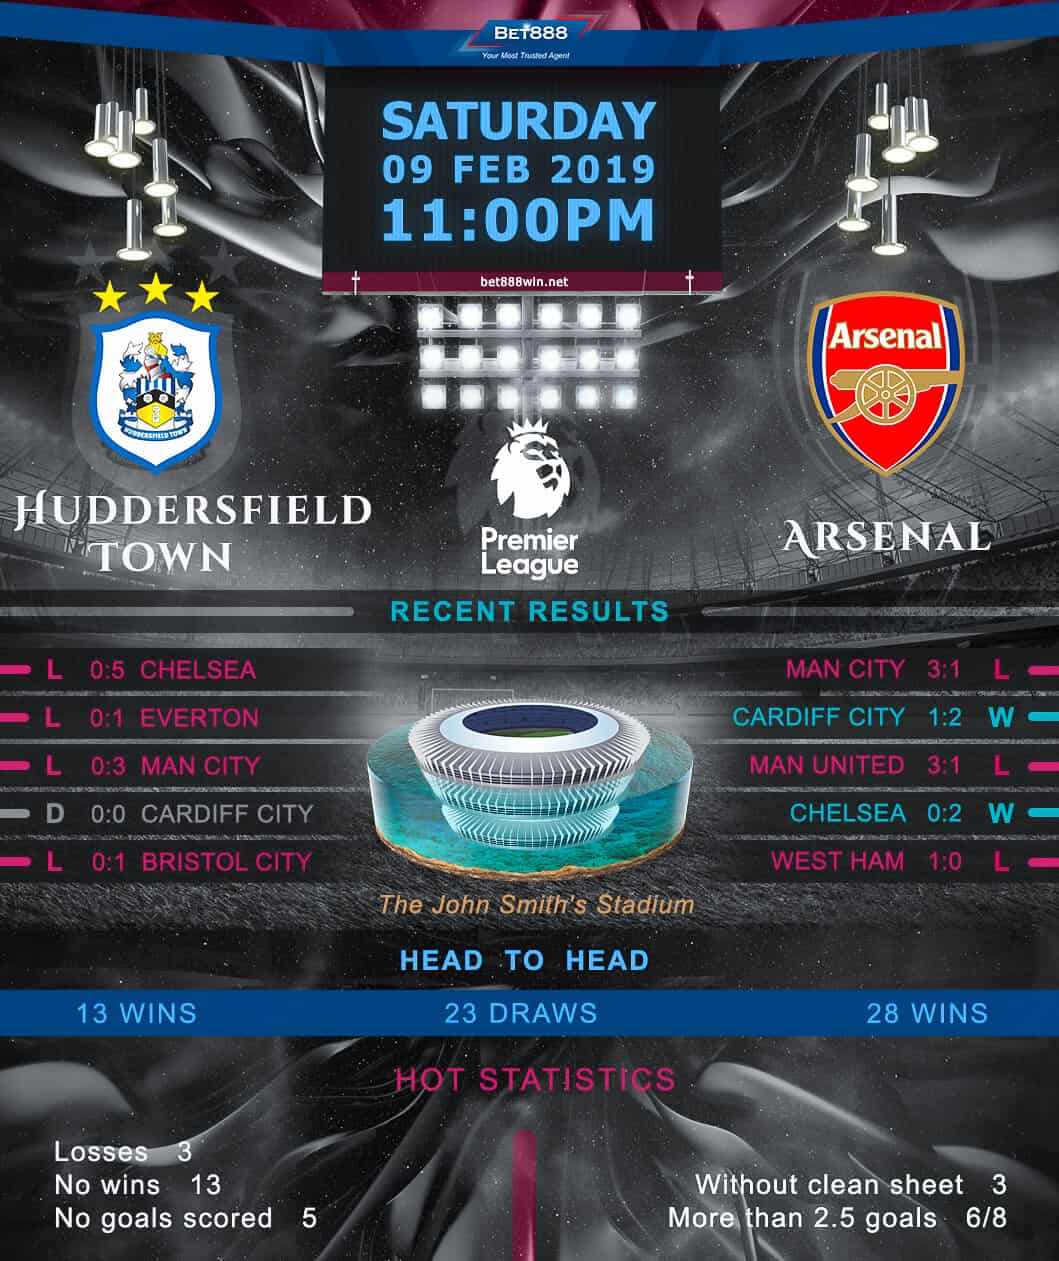 Huddersfield Town vs Arsenal 09/02/19